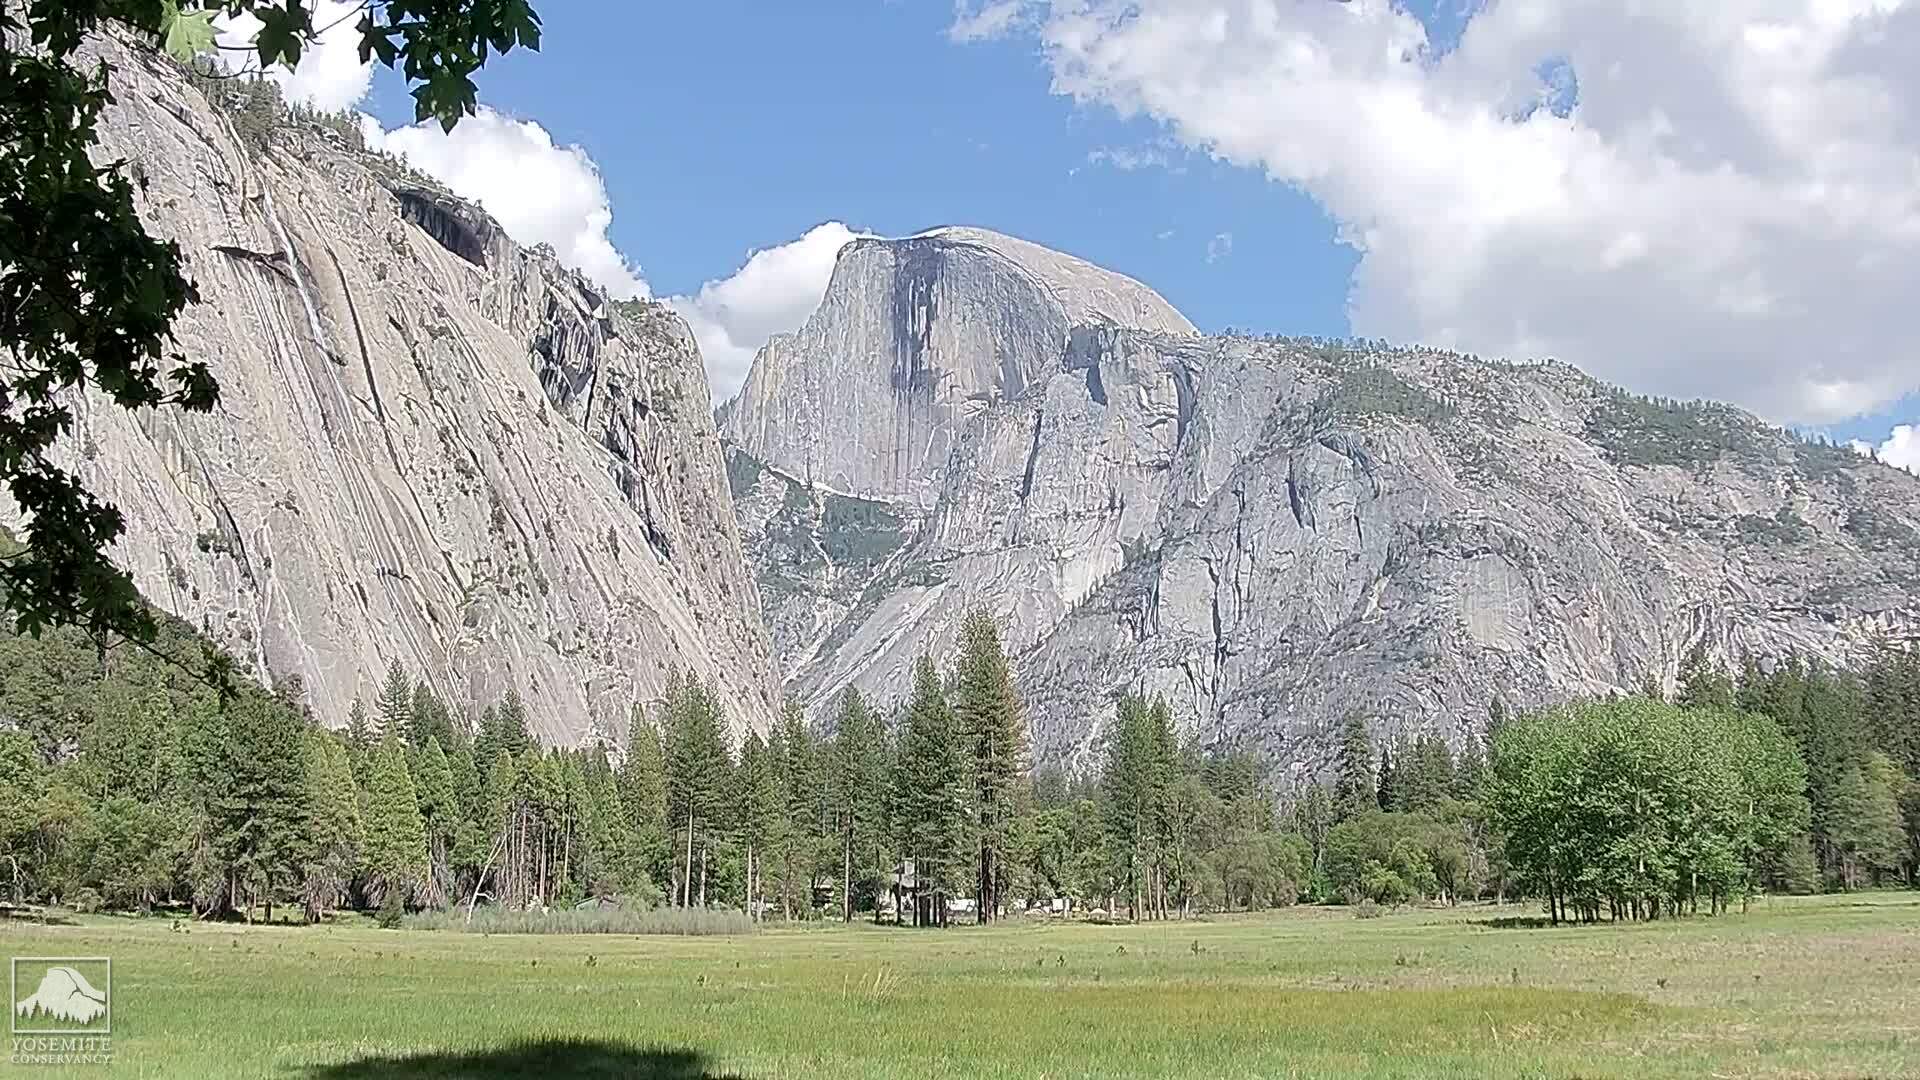 Yosemite-Nationalpark, Kalifornien Do. 15:45